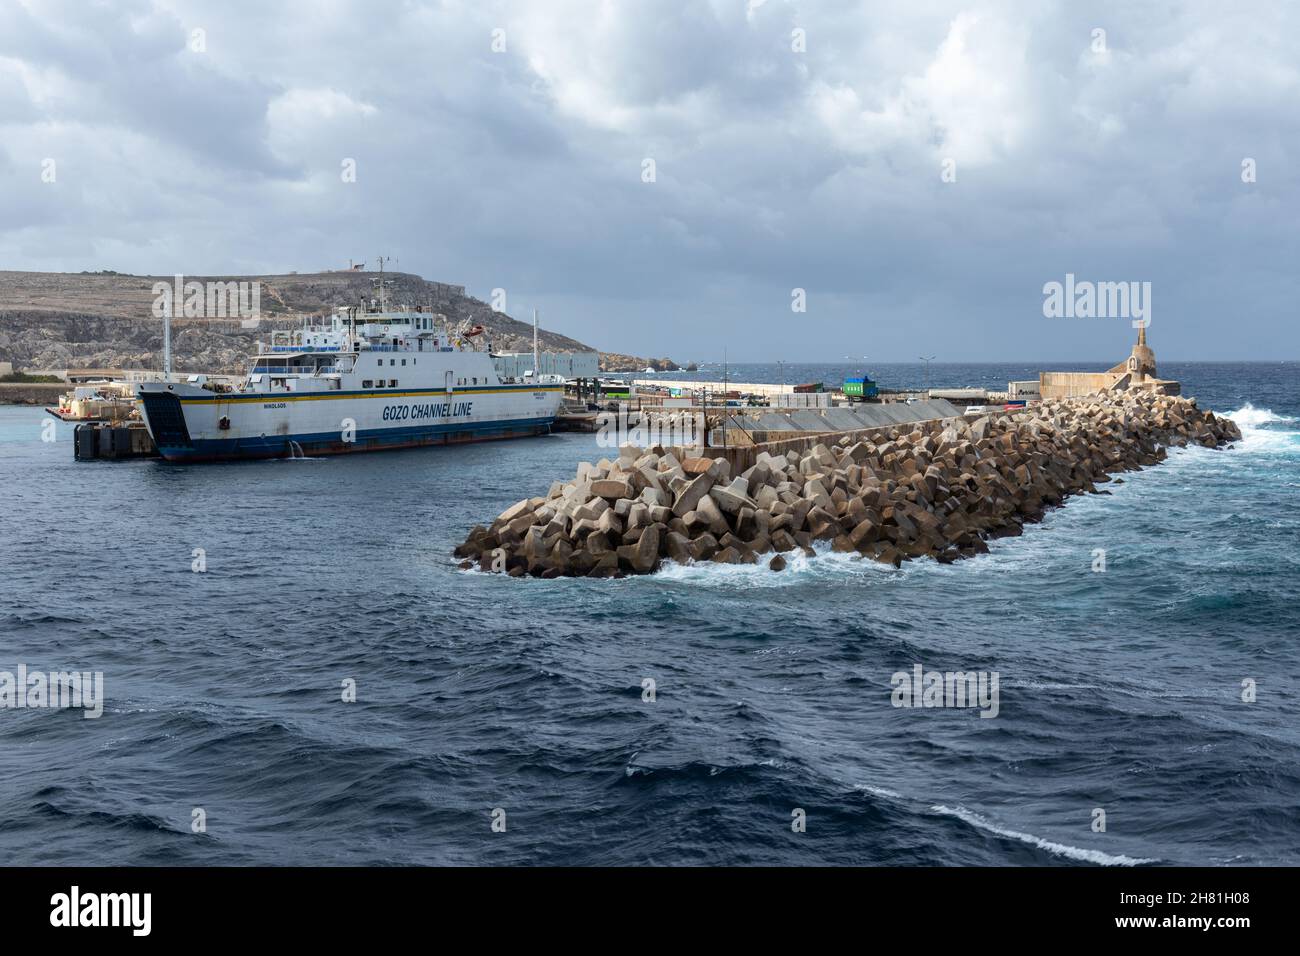 Cirkewwa ferry terminal on the island of Malta. Gozo Channel line ferries - Nikolaos Ferry. Malta, Europe Stock Photo